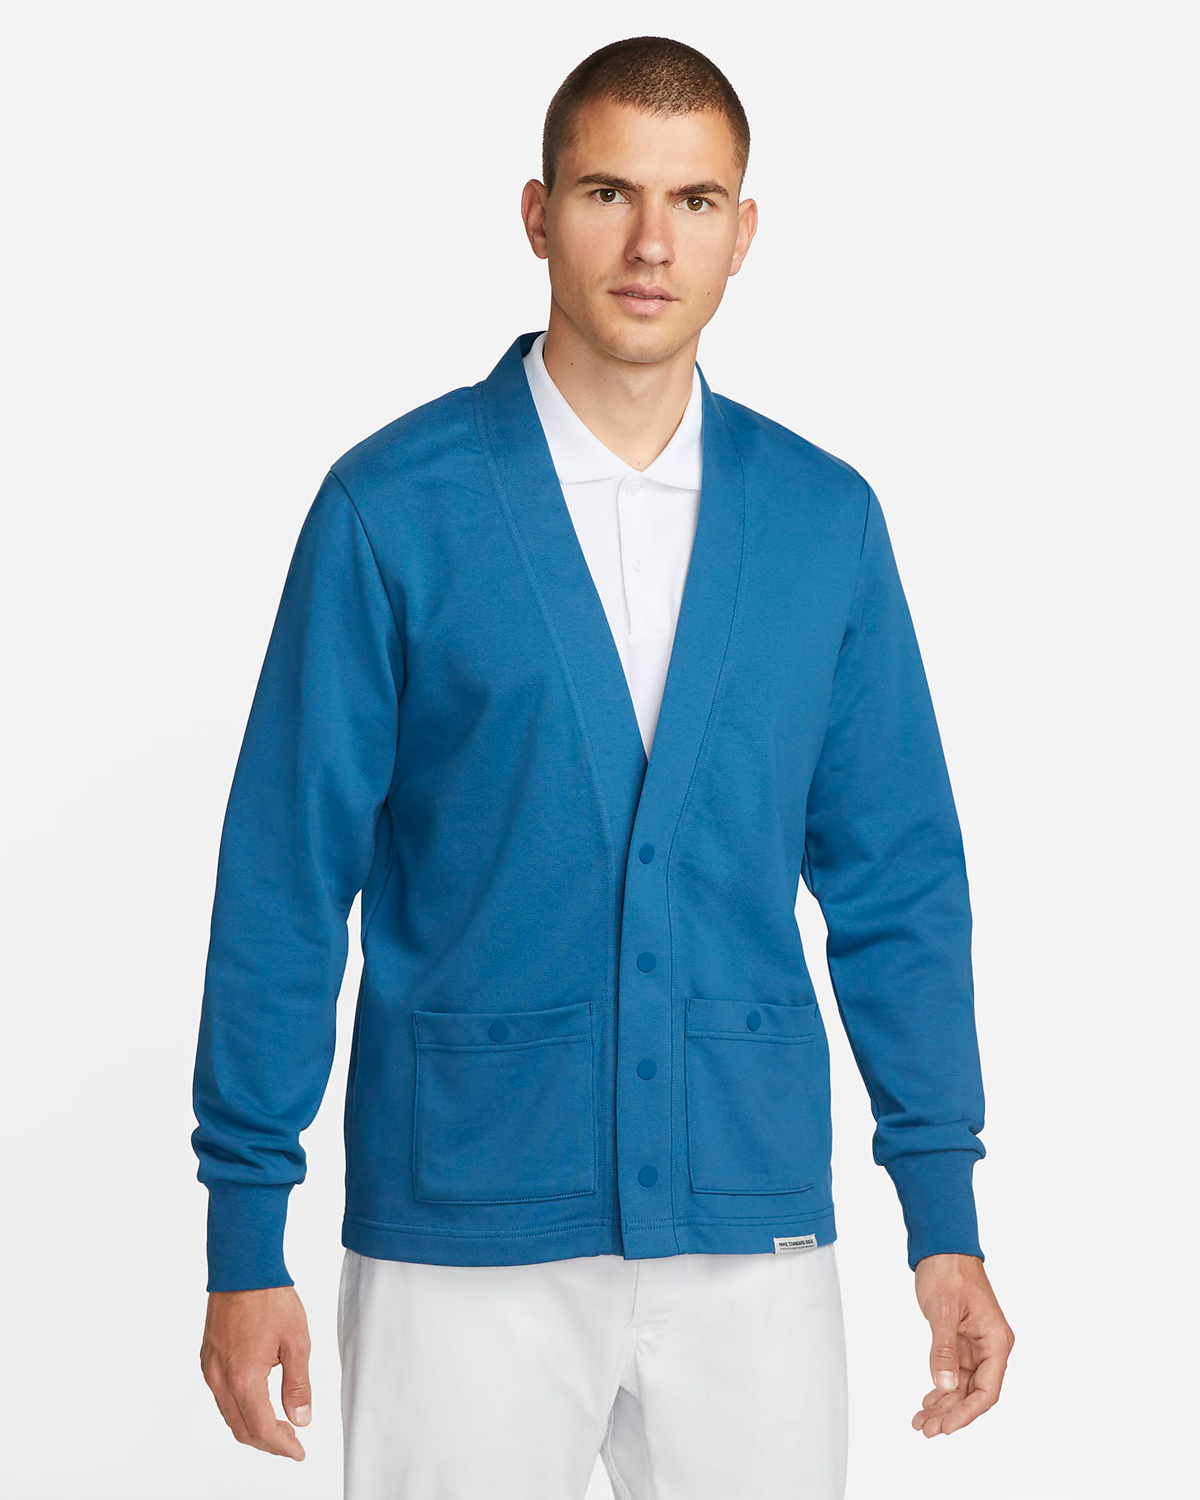 Nike-Standard-Issue-Golf-Cardigan-Sweater-Industrial-Blue